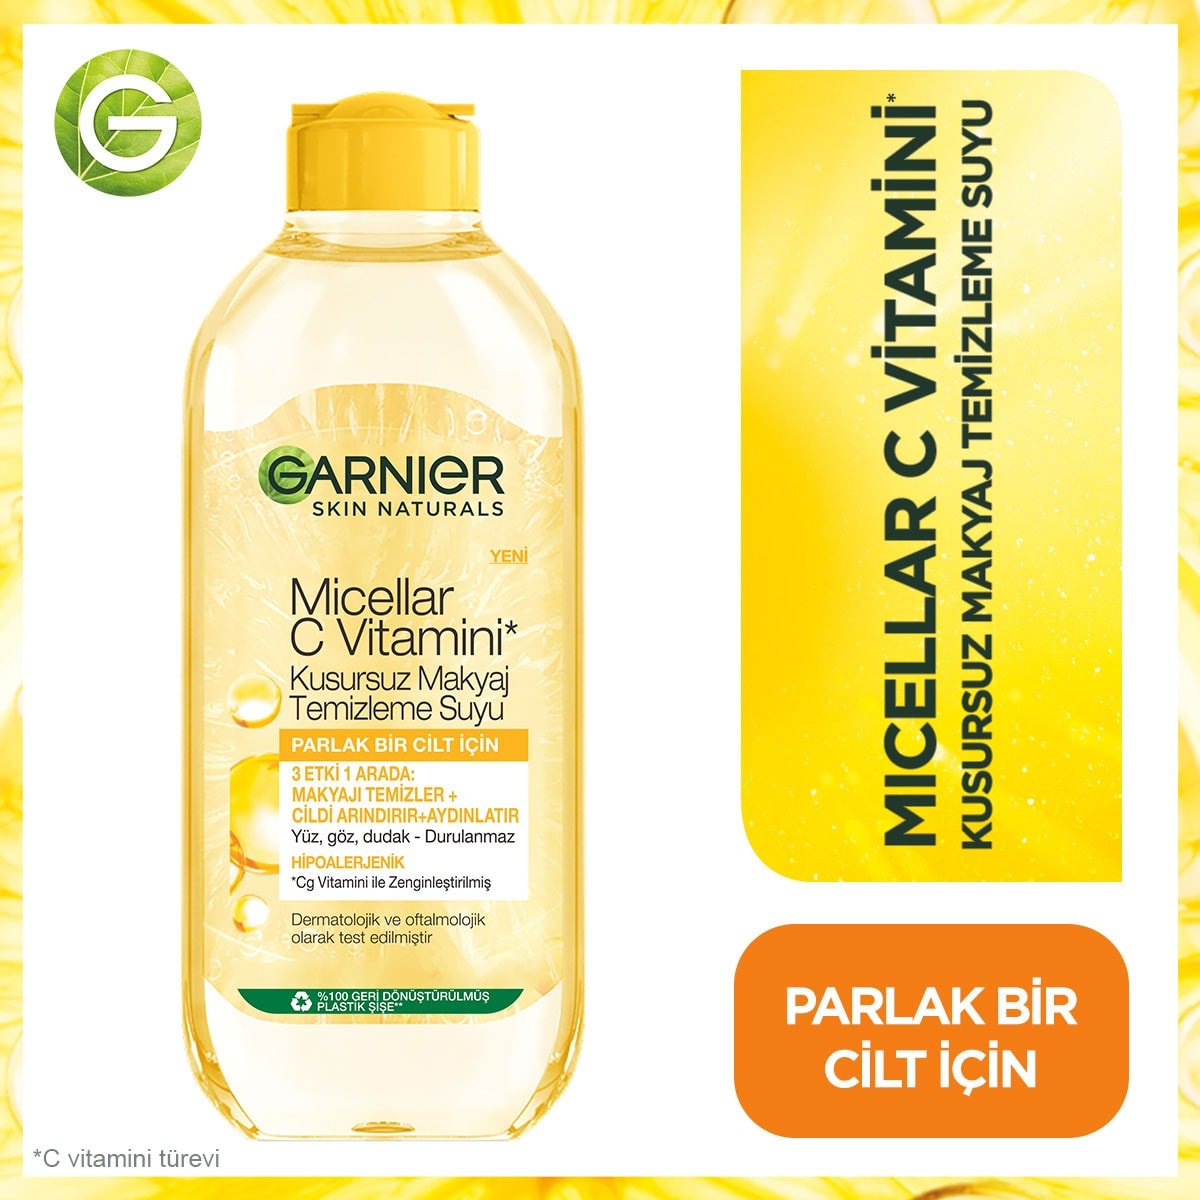 Garnier Micellar C Vitamini Kusursuz Makyaj Temizleme Suyu 1